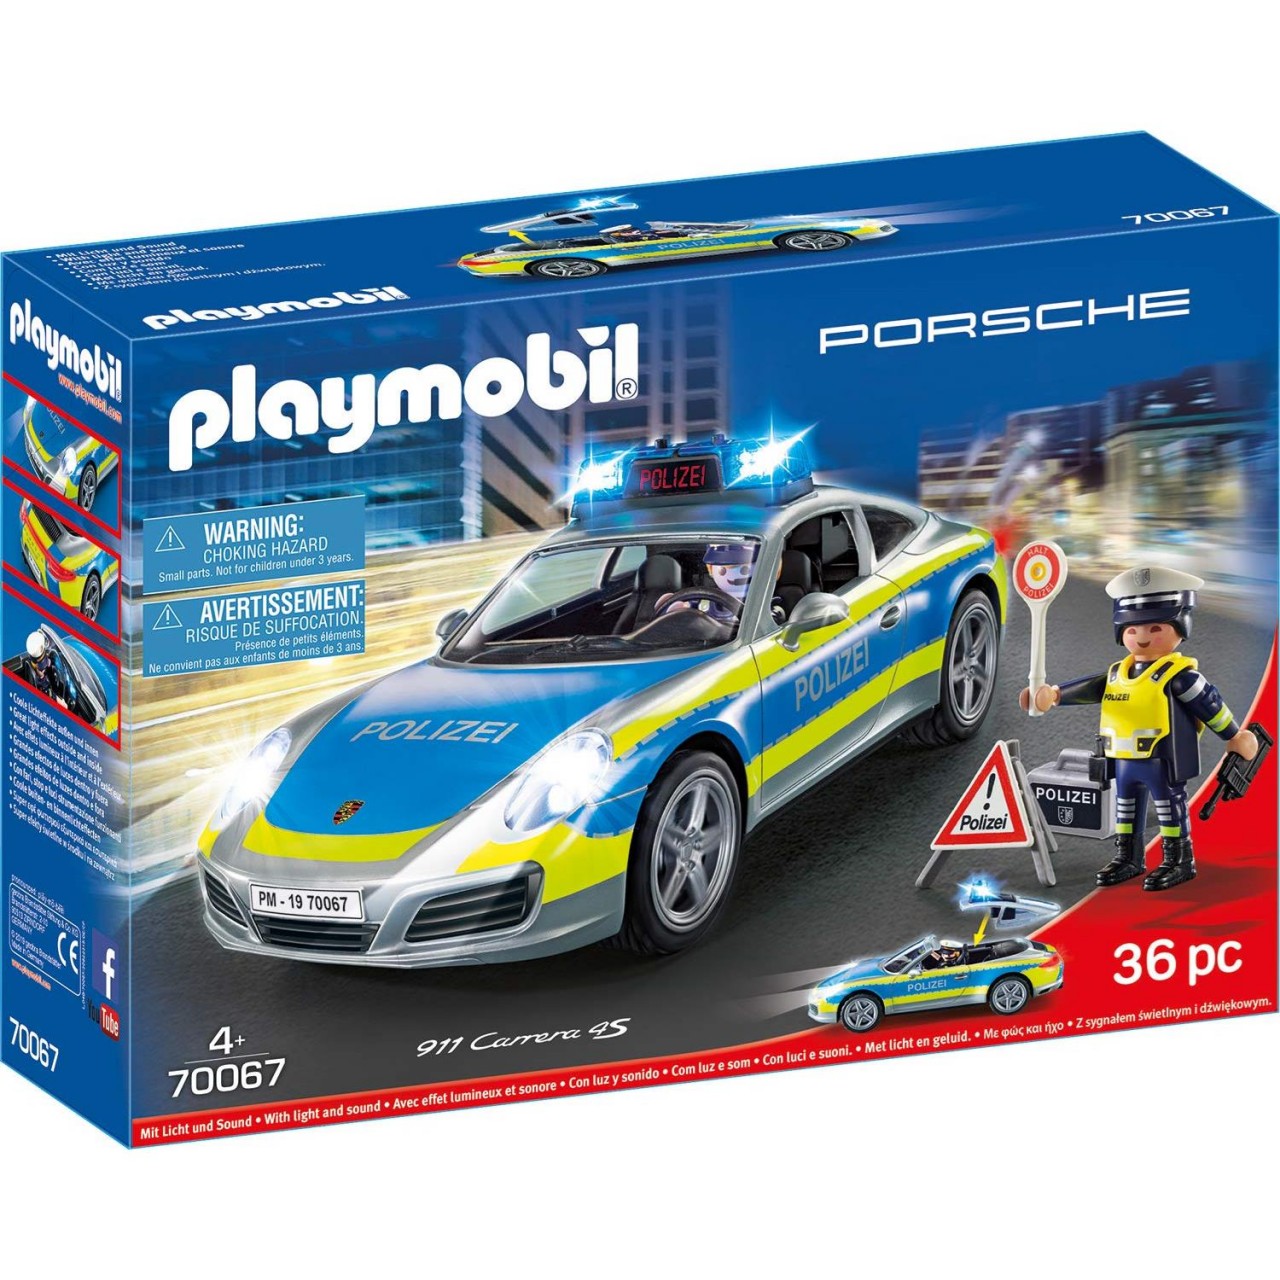 Playmobil 70067 Porsche 911 Carrera 4S Polizei